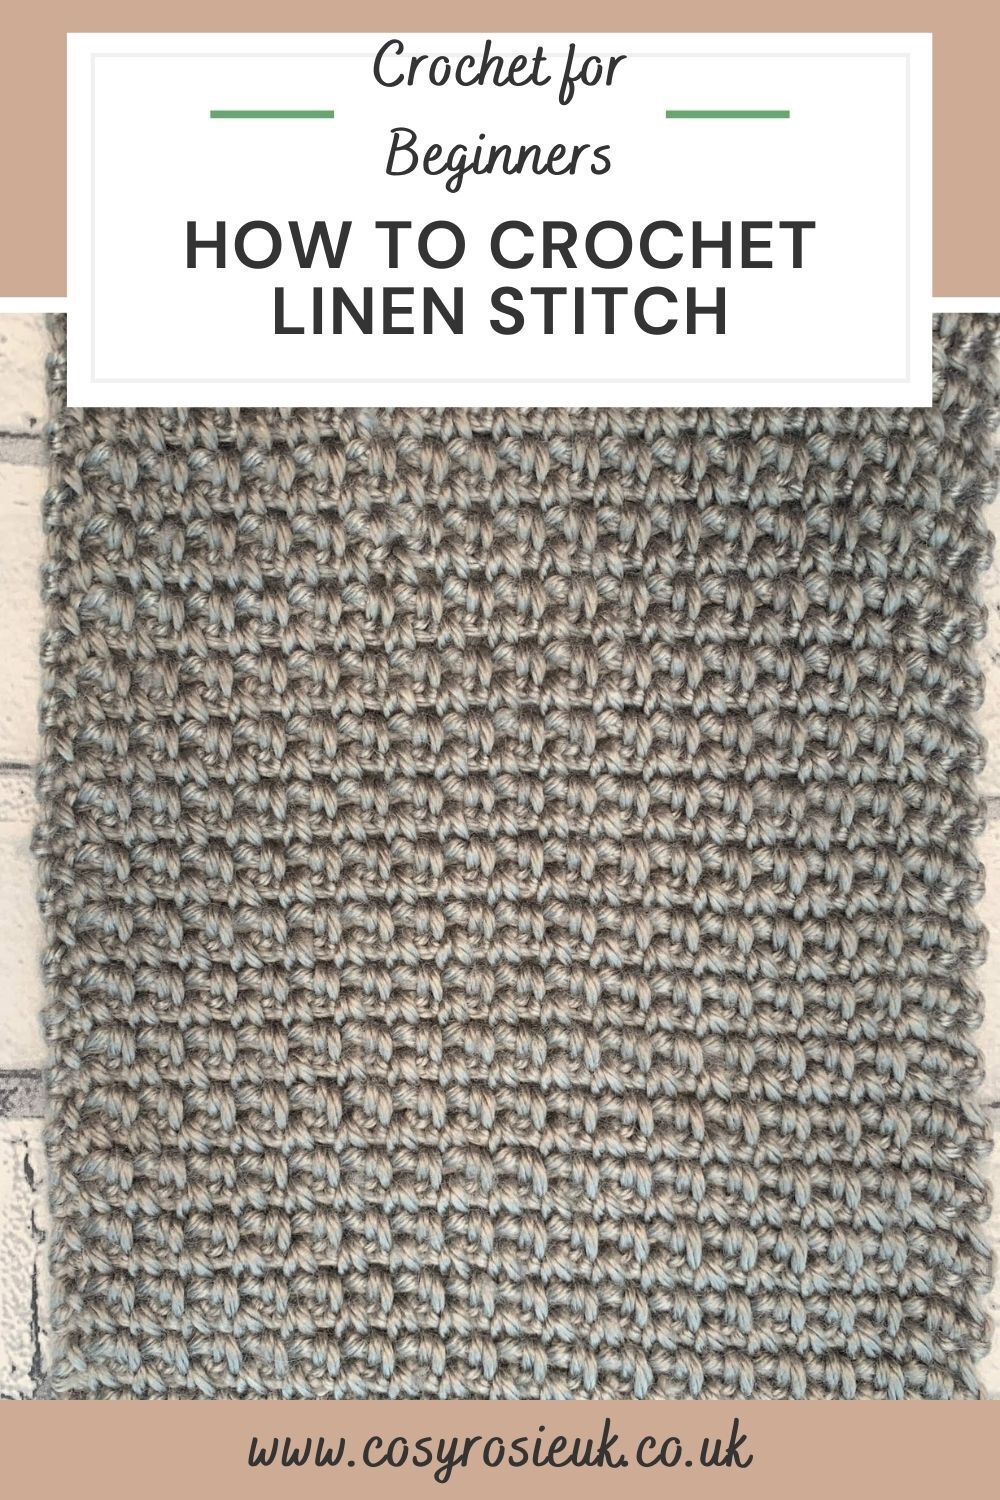 How to crochet linen stitch